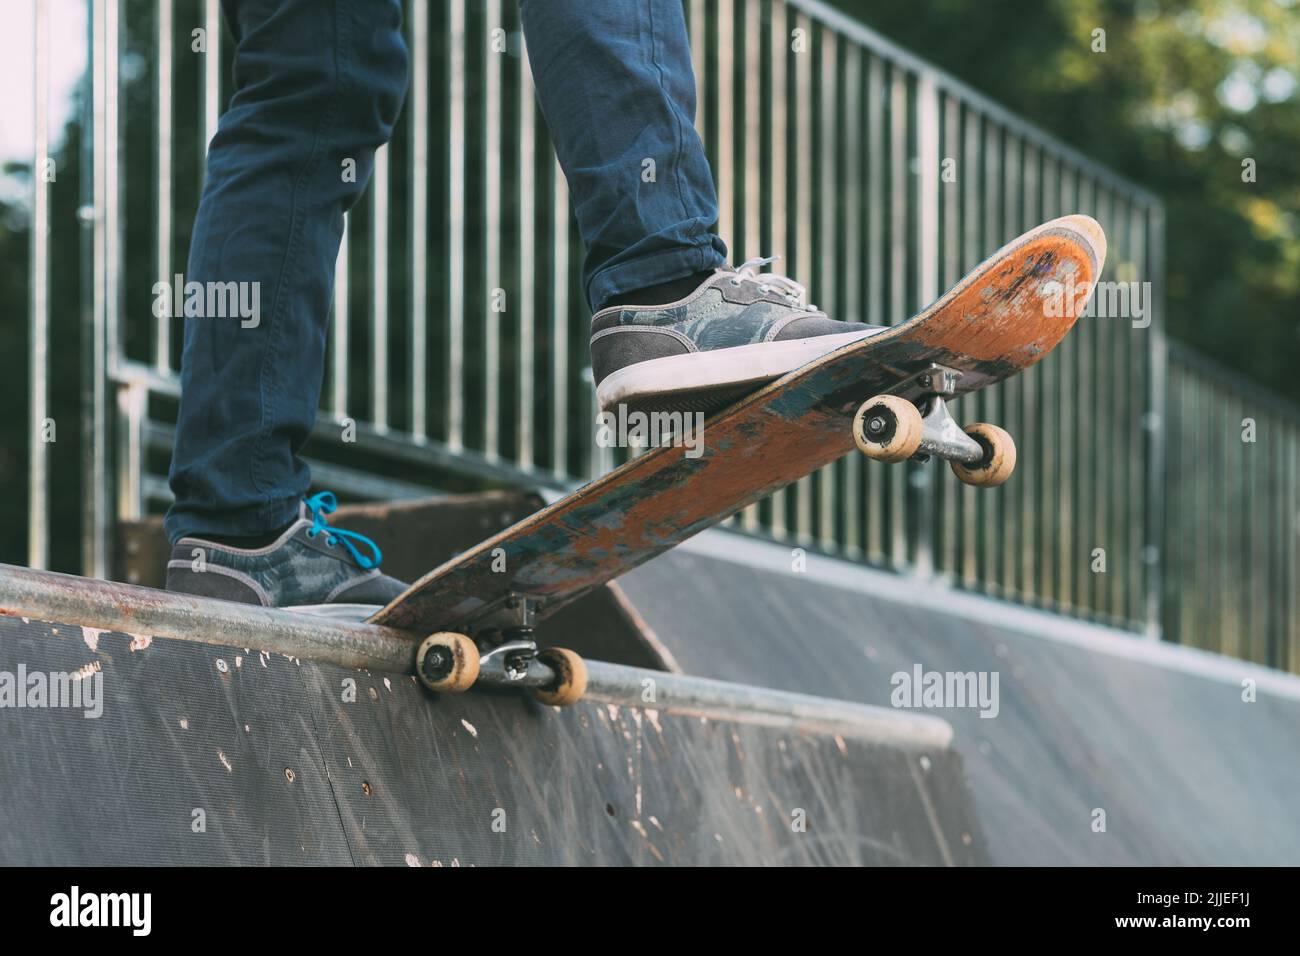 skateboarding lifestyle youth culture man ramp Stock Photo